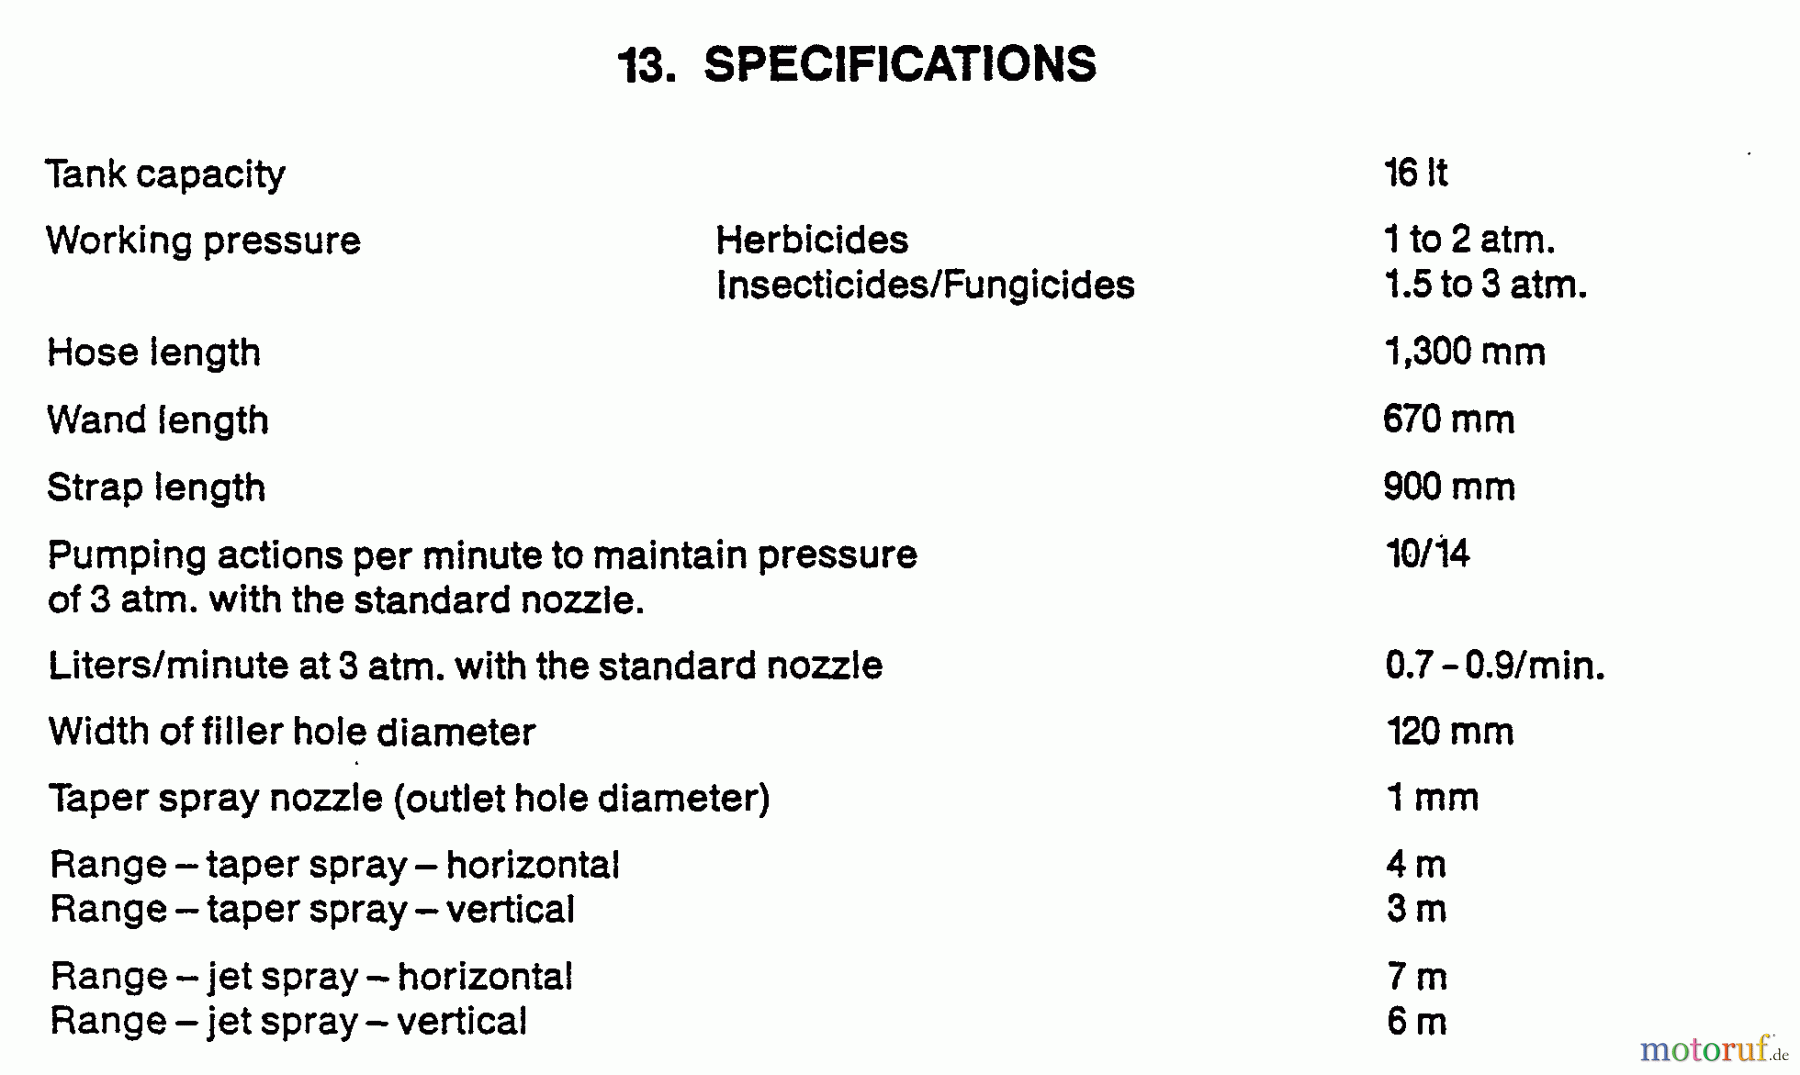  Echo Pflanzenschutzspritzen MS-16 - Echo Manual Sprayer Specifications